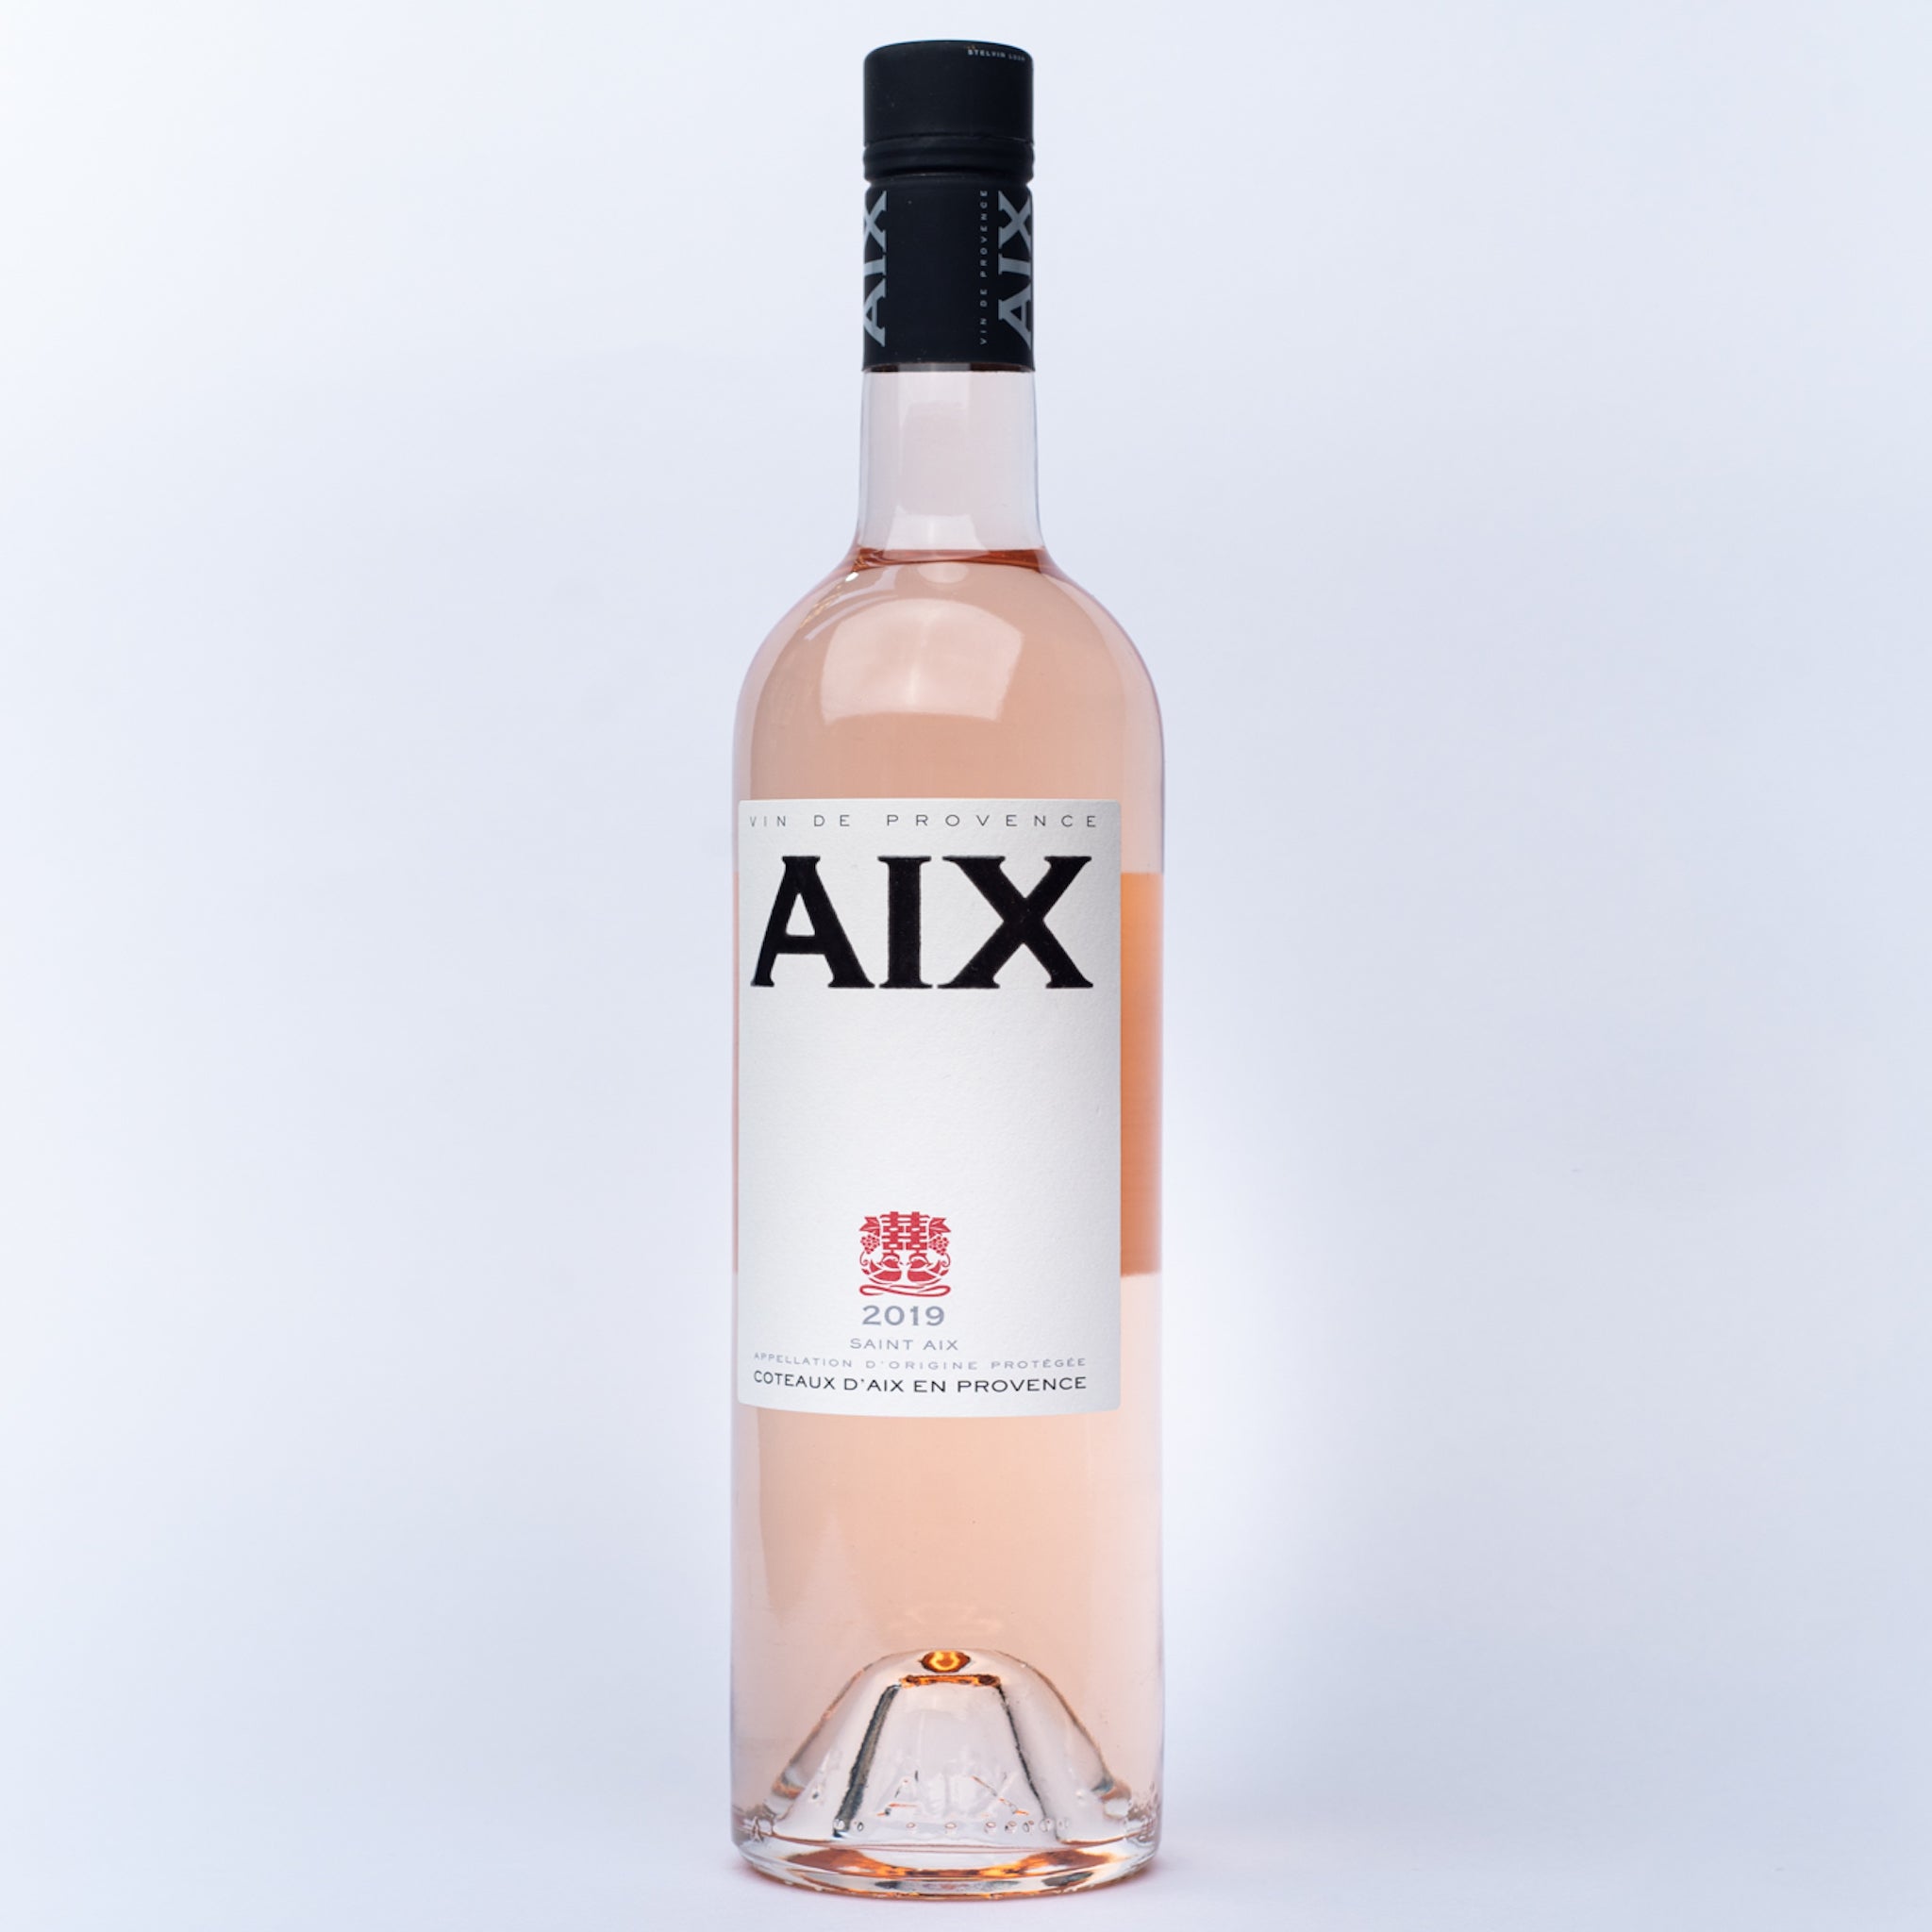 a 750ml bottle of Aix en Provence rose wine.